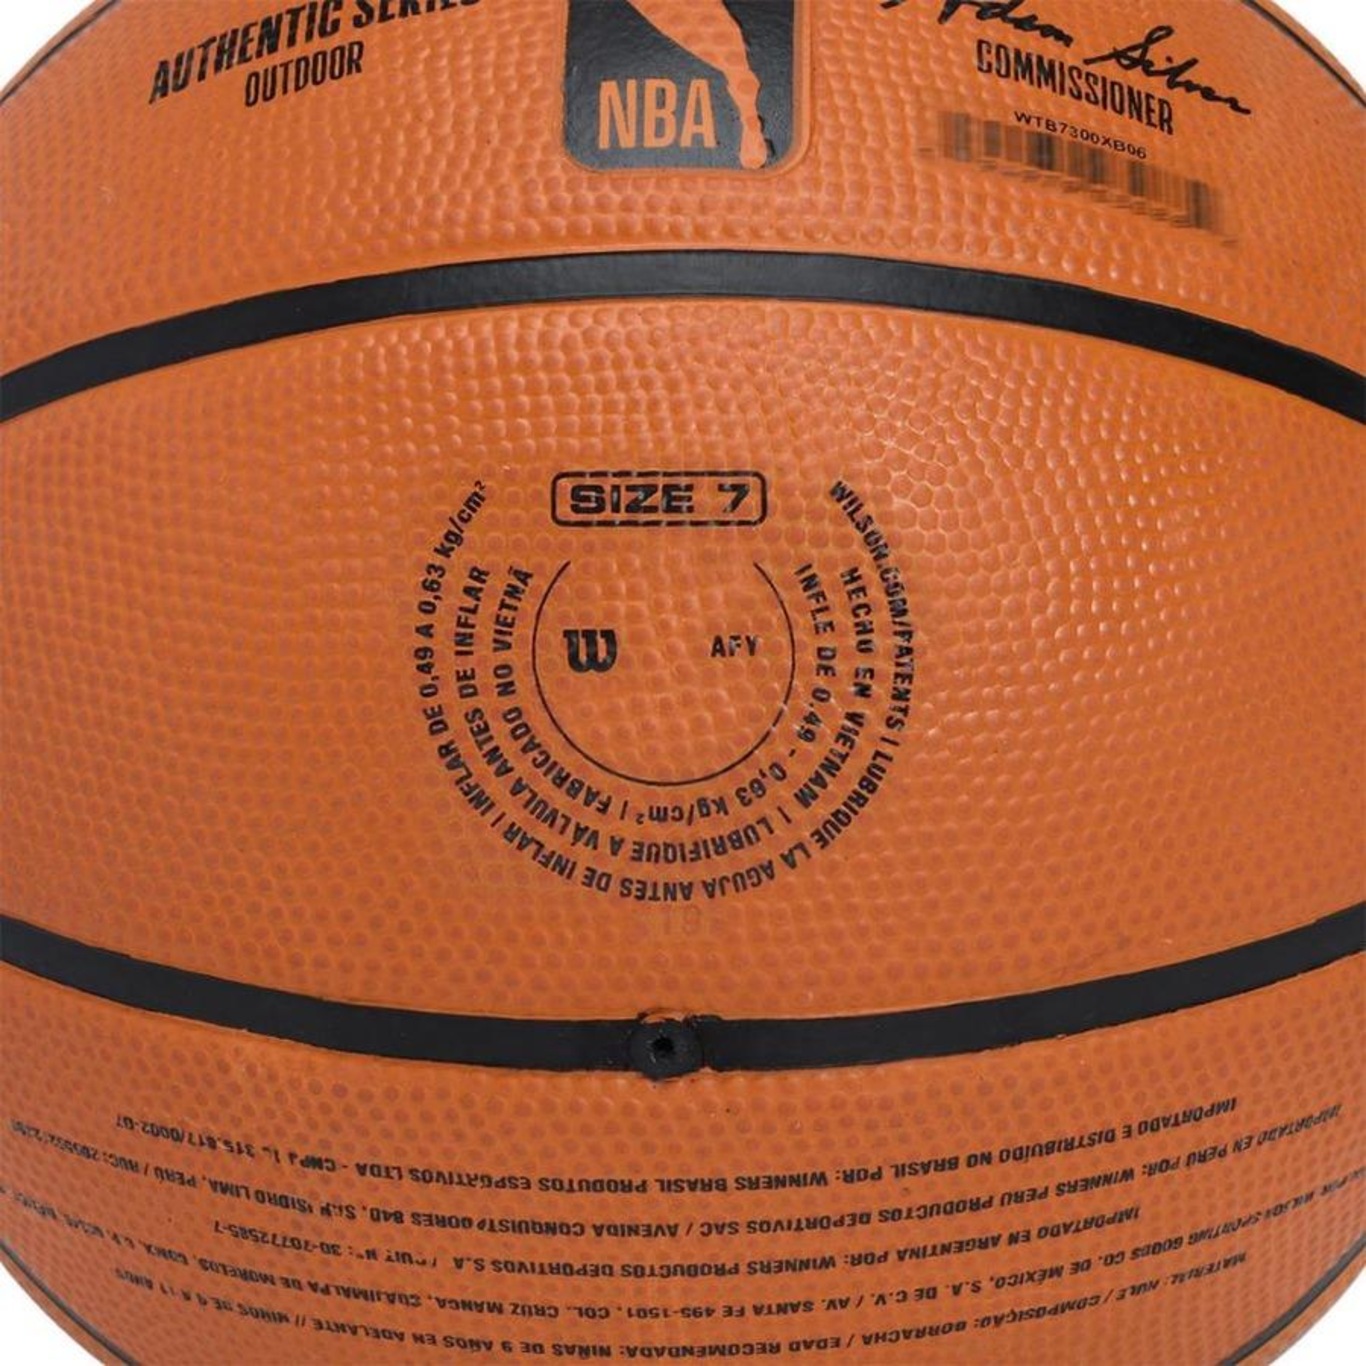 Bola de Basquete Wilson NBA Authentic Indoor Outdoor #7